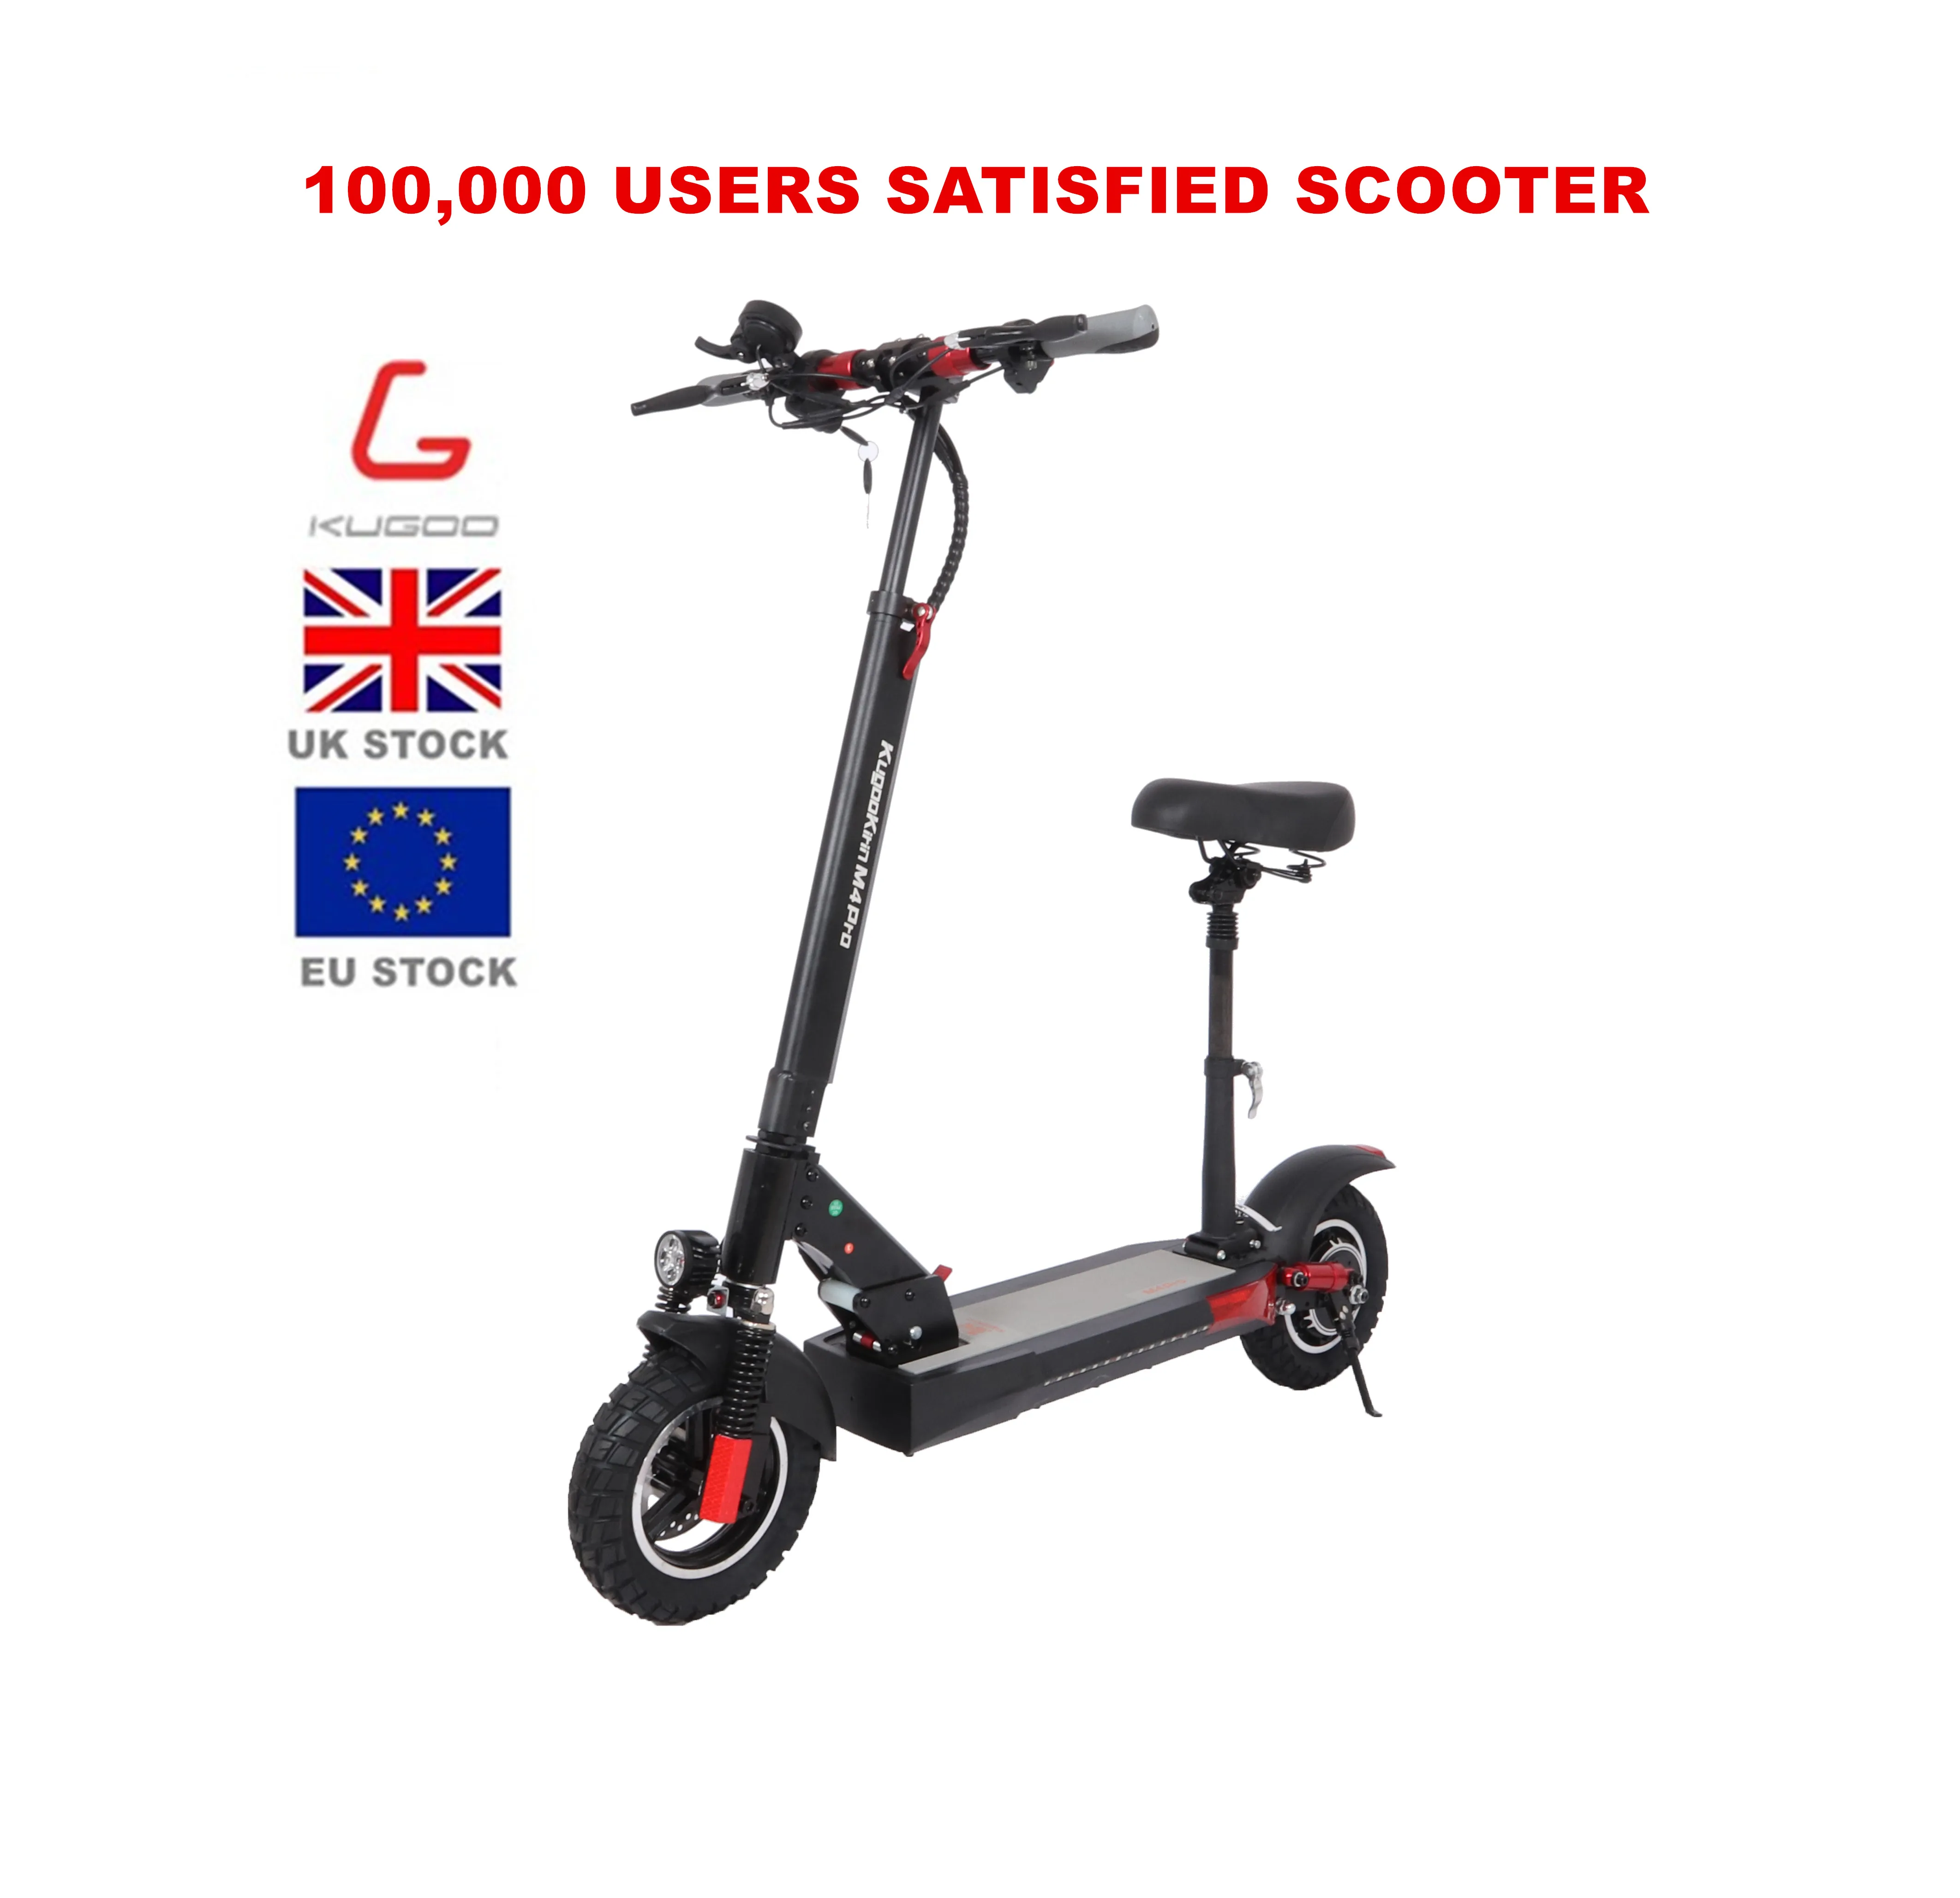 

2021 new version Drop shipping tax free Poland warehouse UK warehouse free shipping kugoo m4 pro electric scooters